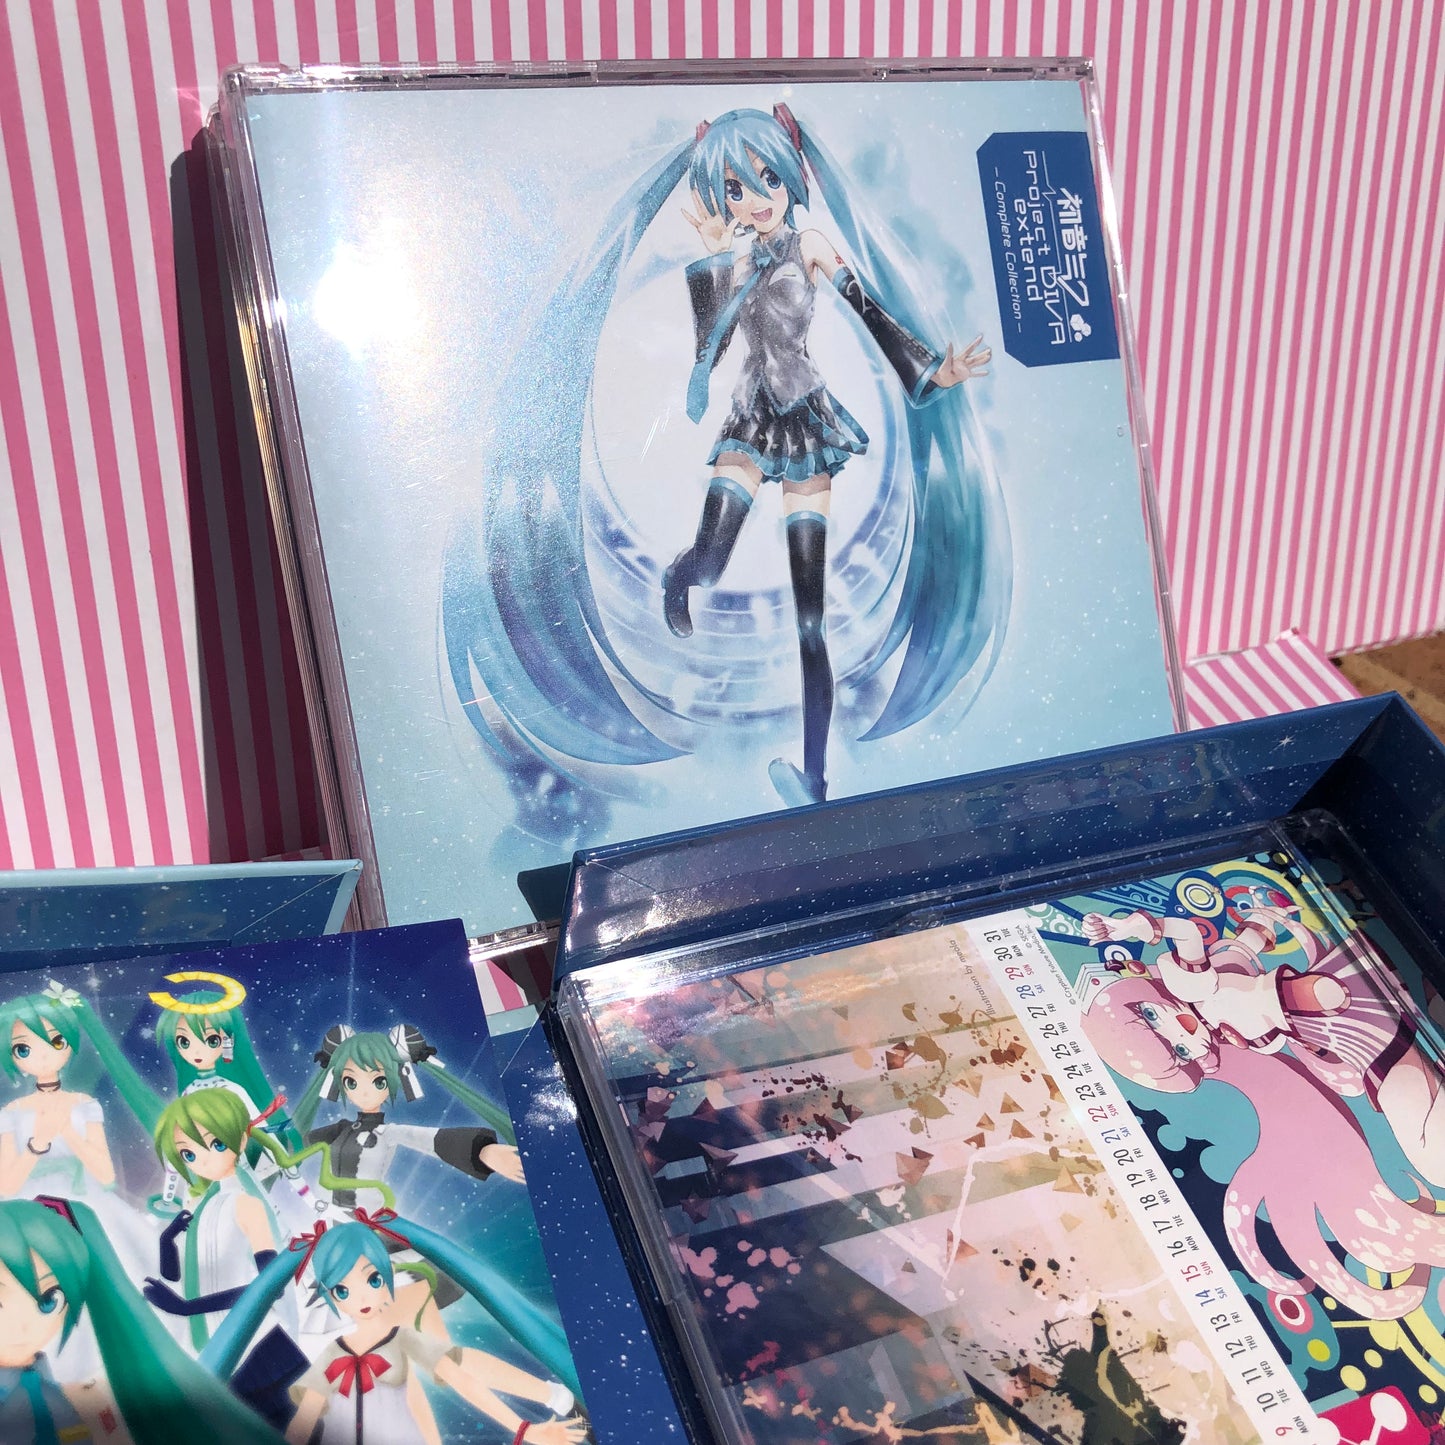 Vocaloid Hatsune Miku Project Diva Extended Complete Collection (2CD + DVD + Calendar)